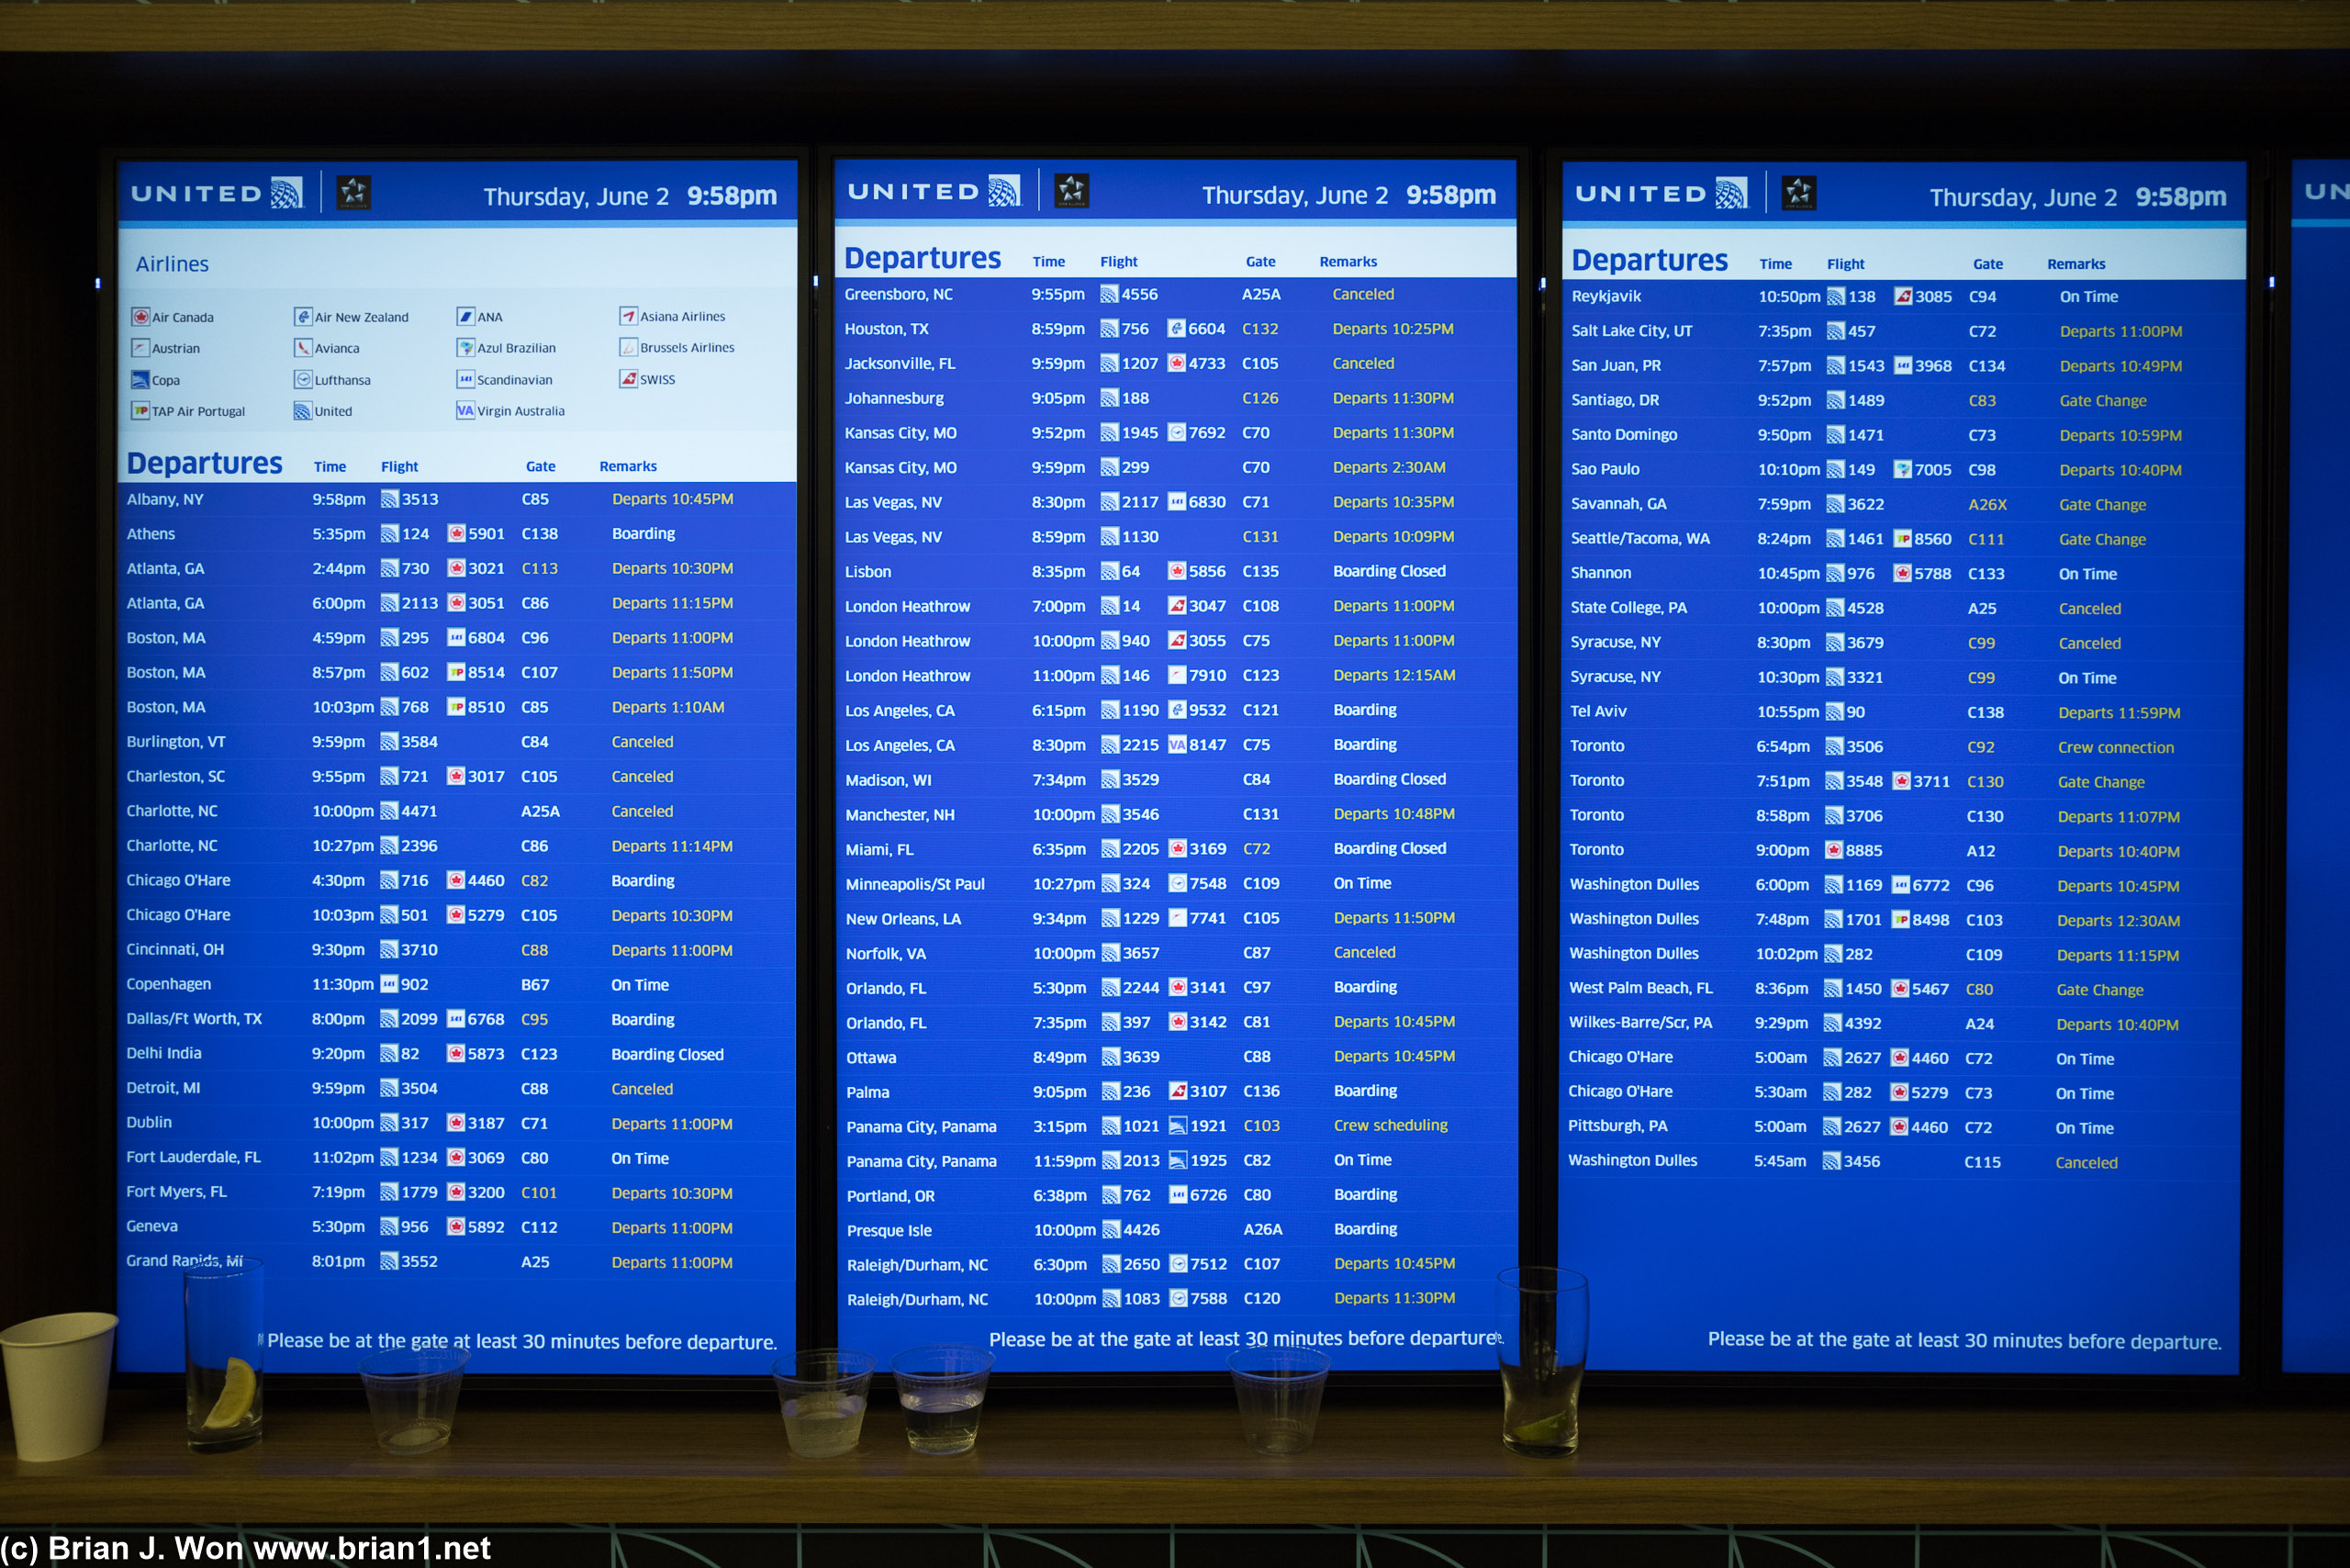 Flight board shows so many delays. ;_;